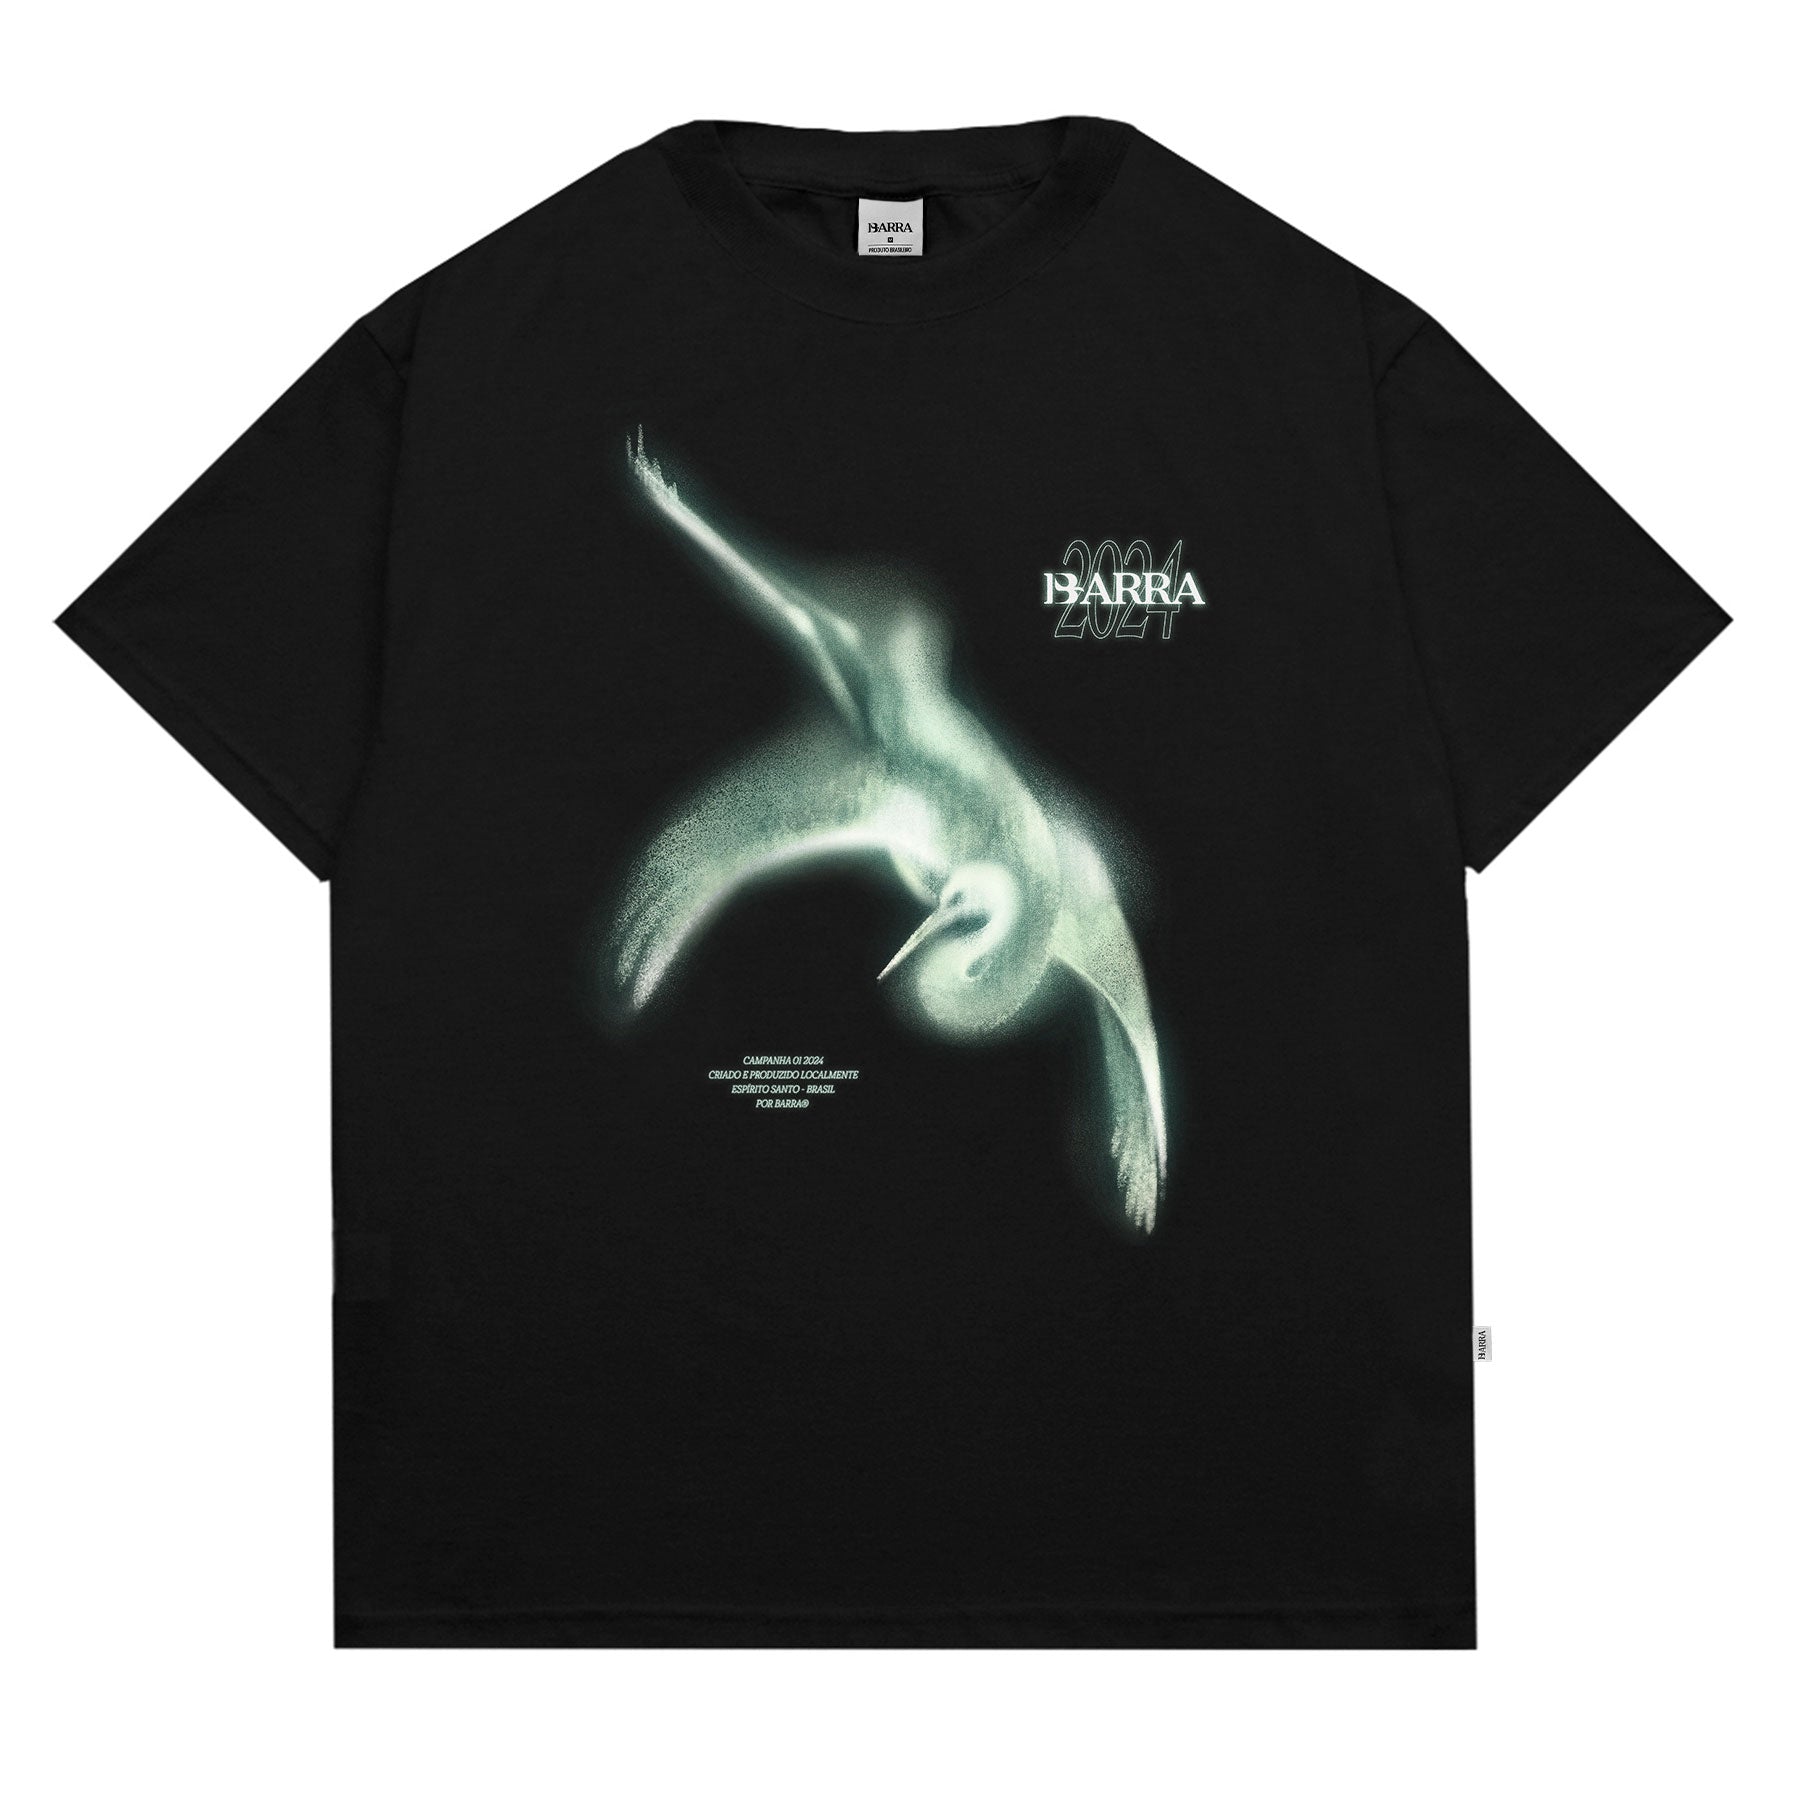 Barra Crew - Camiseta Ahlma Espectro Preta